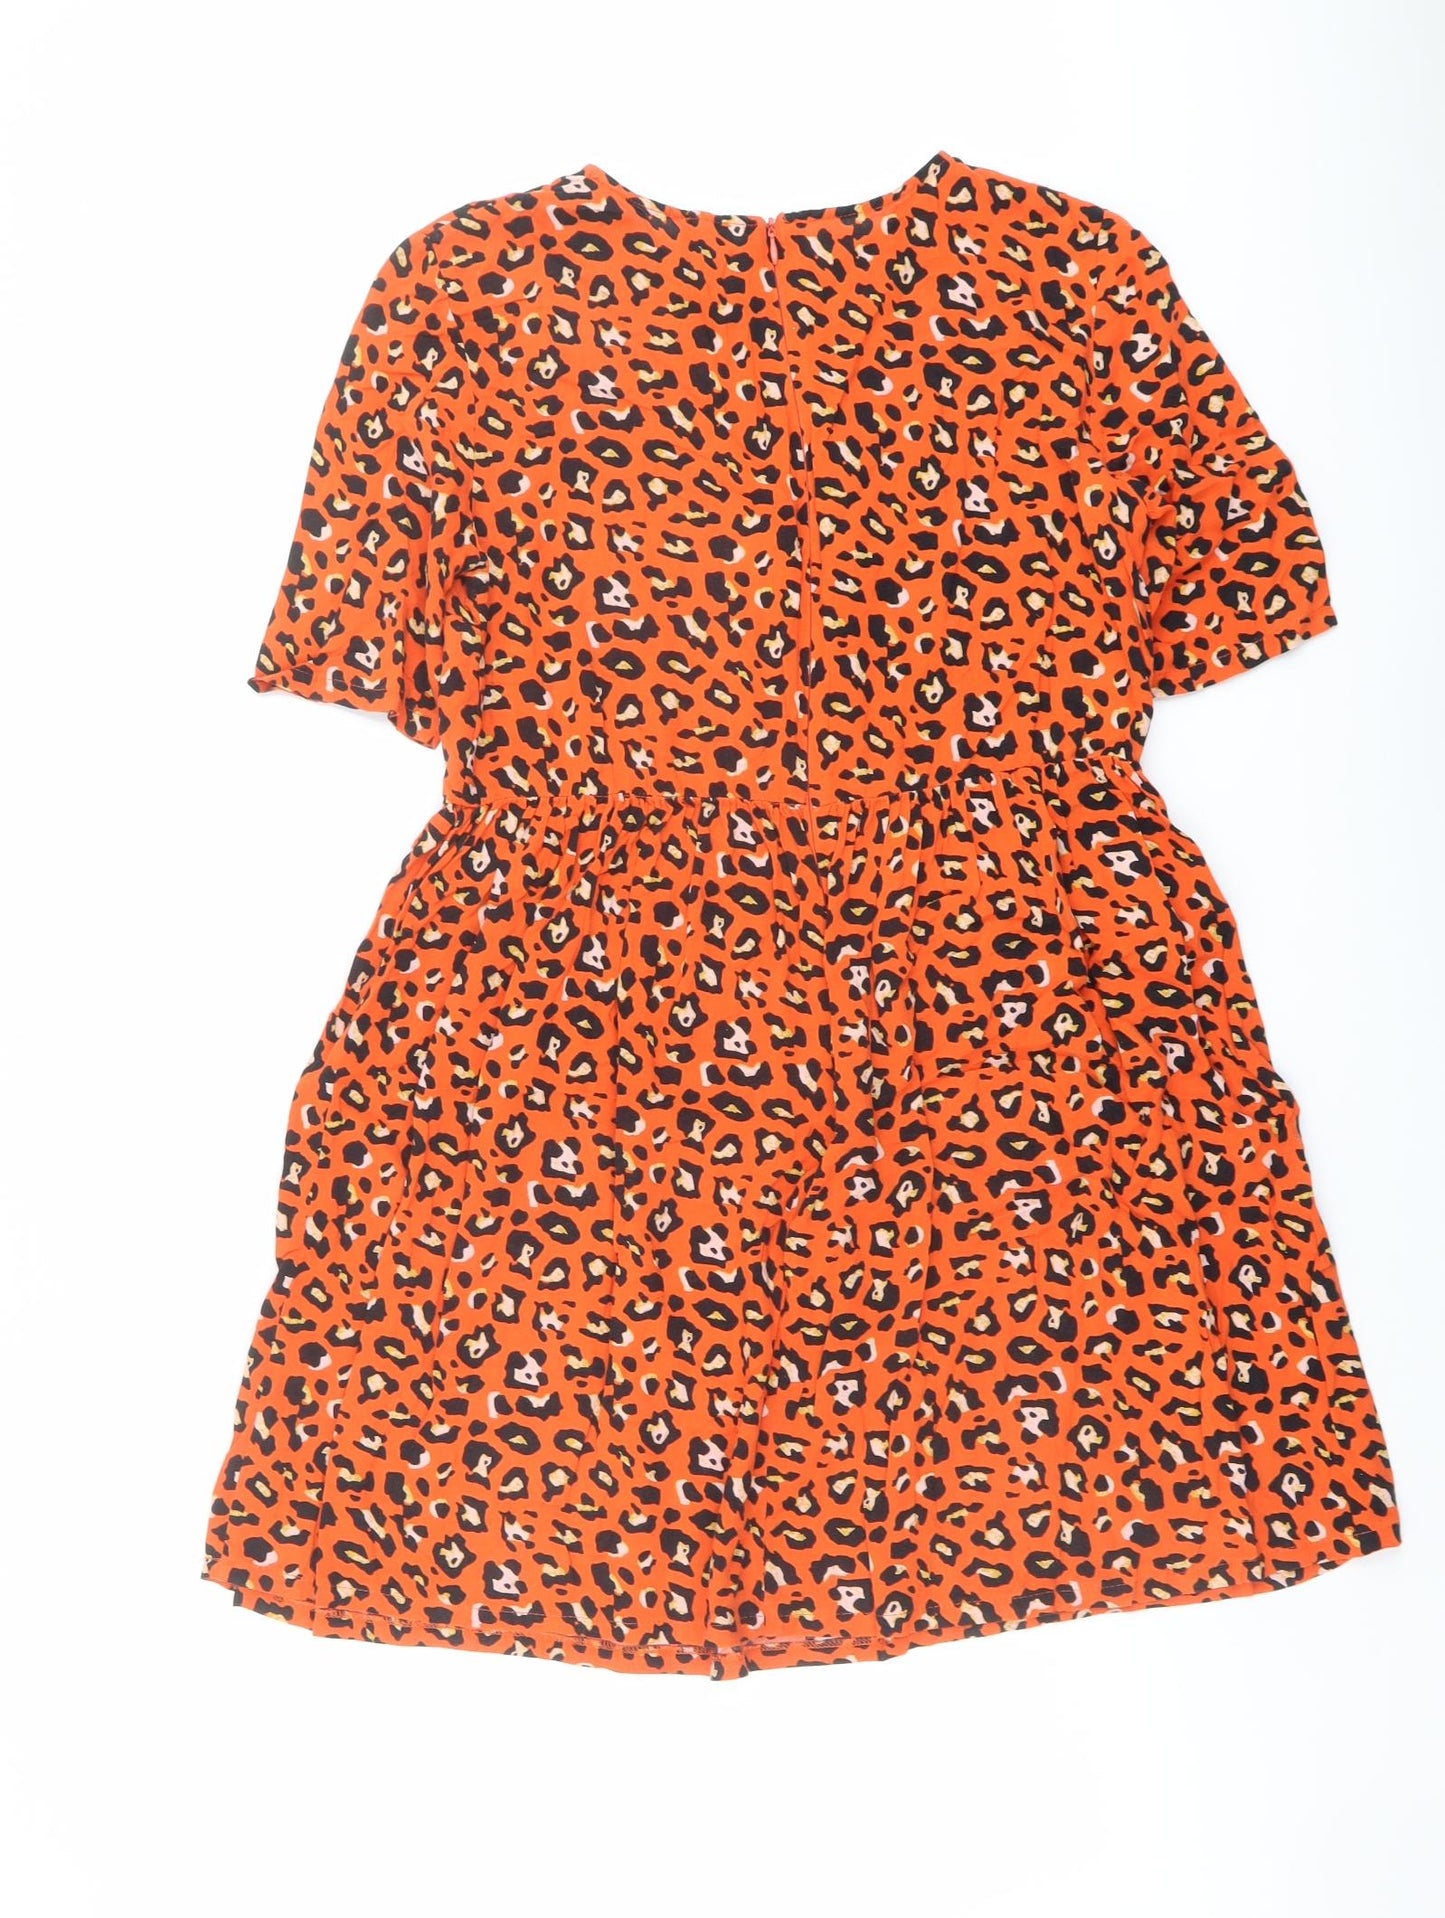 ASOS Womens Orange Animal Print Viscose A-Line Size 10 Round Neck Zip - Leopard pattern